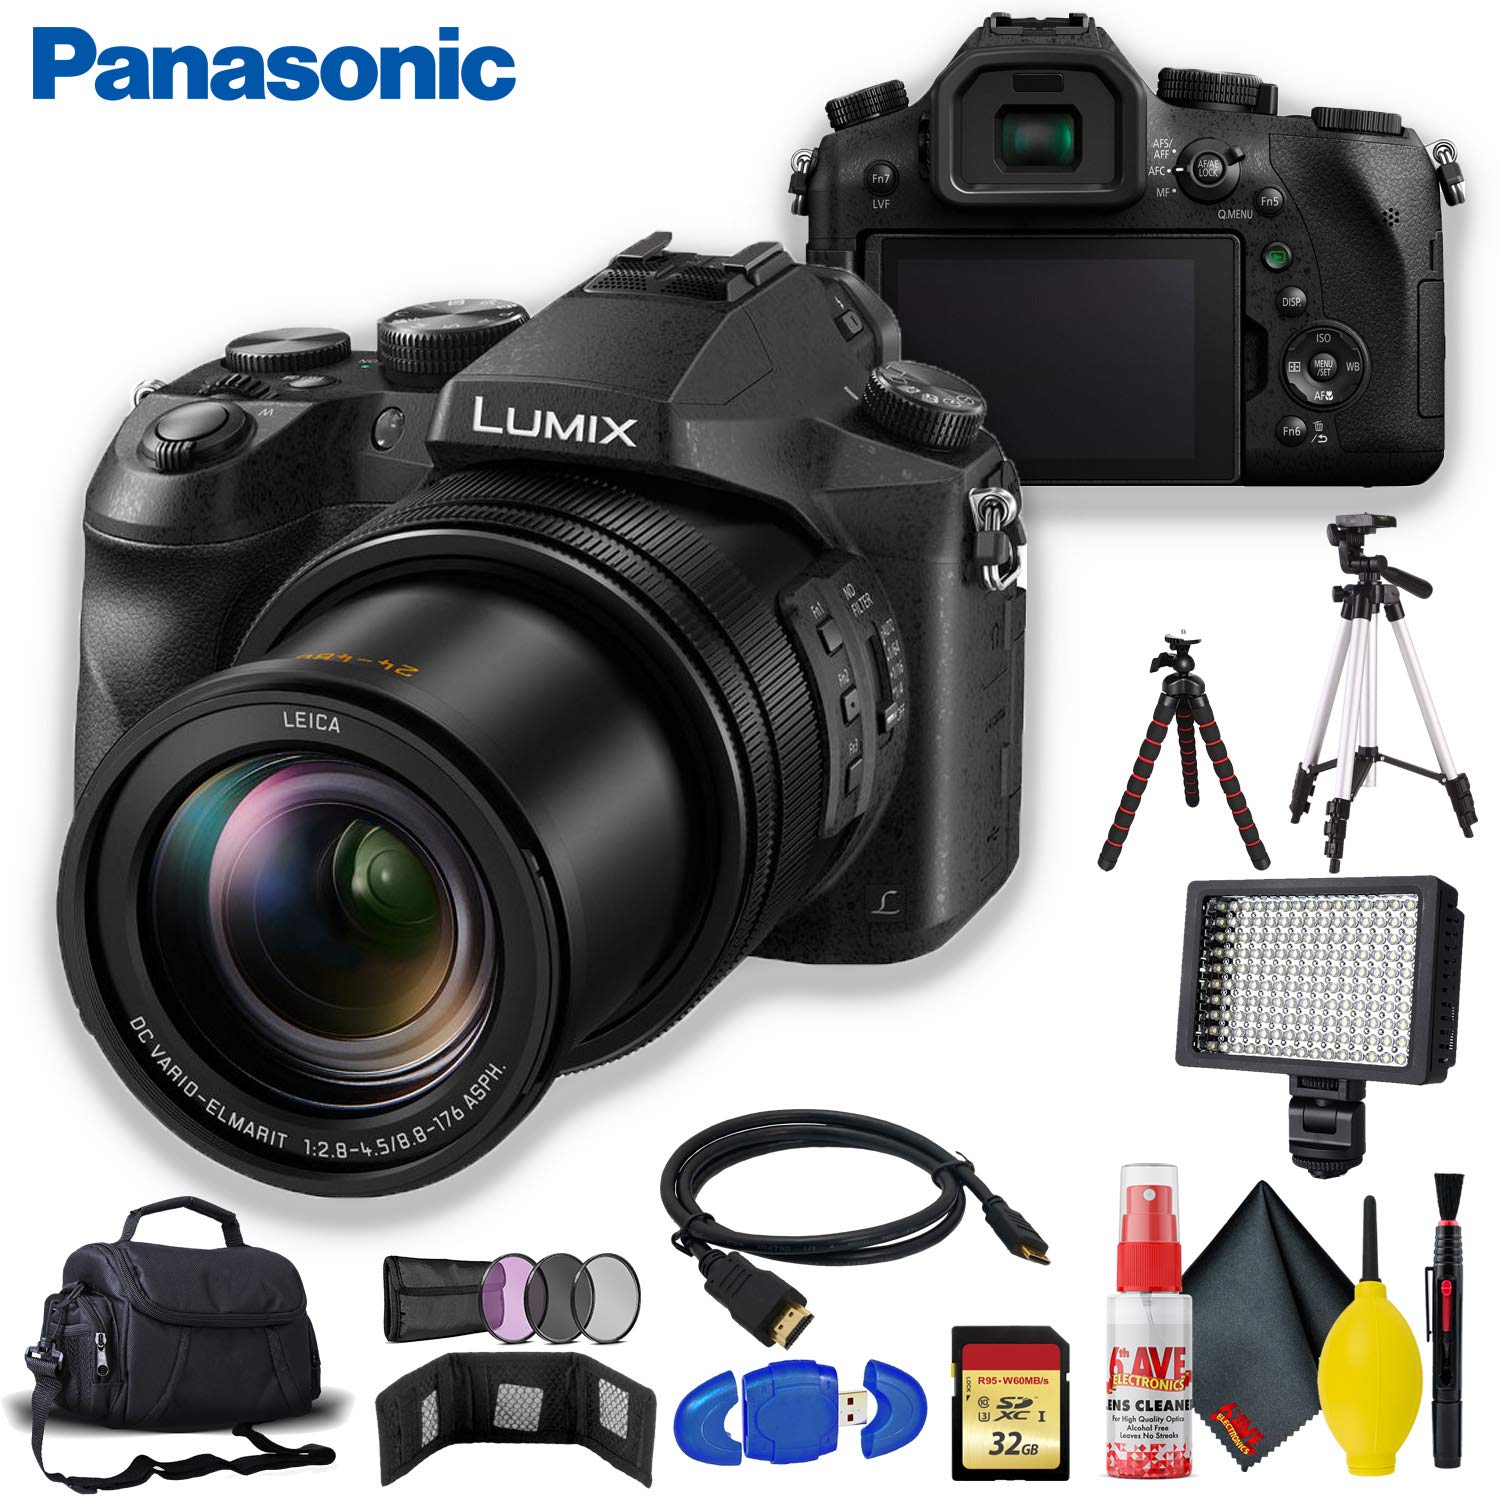 Panasonic Lumix DMC-FZ2500 Digital Camera with Tripod Kit Advanced Bundle